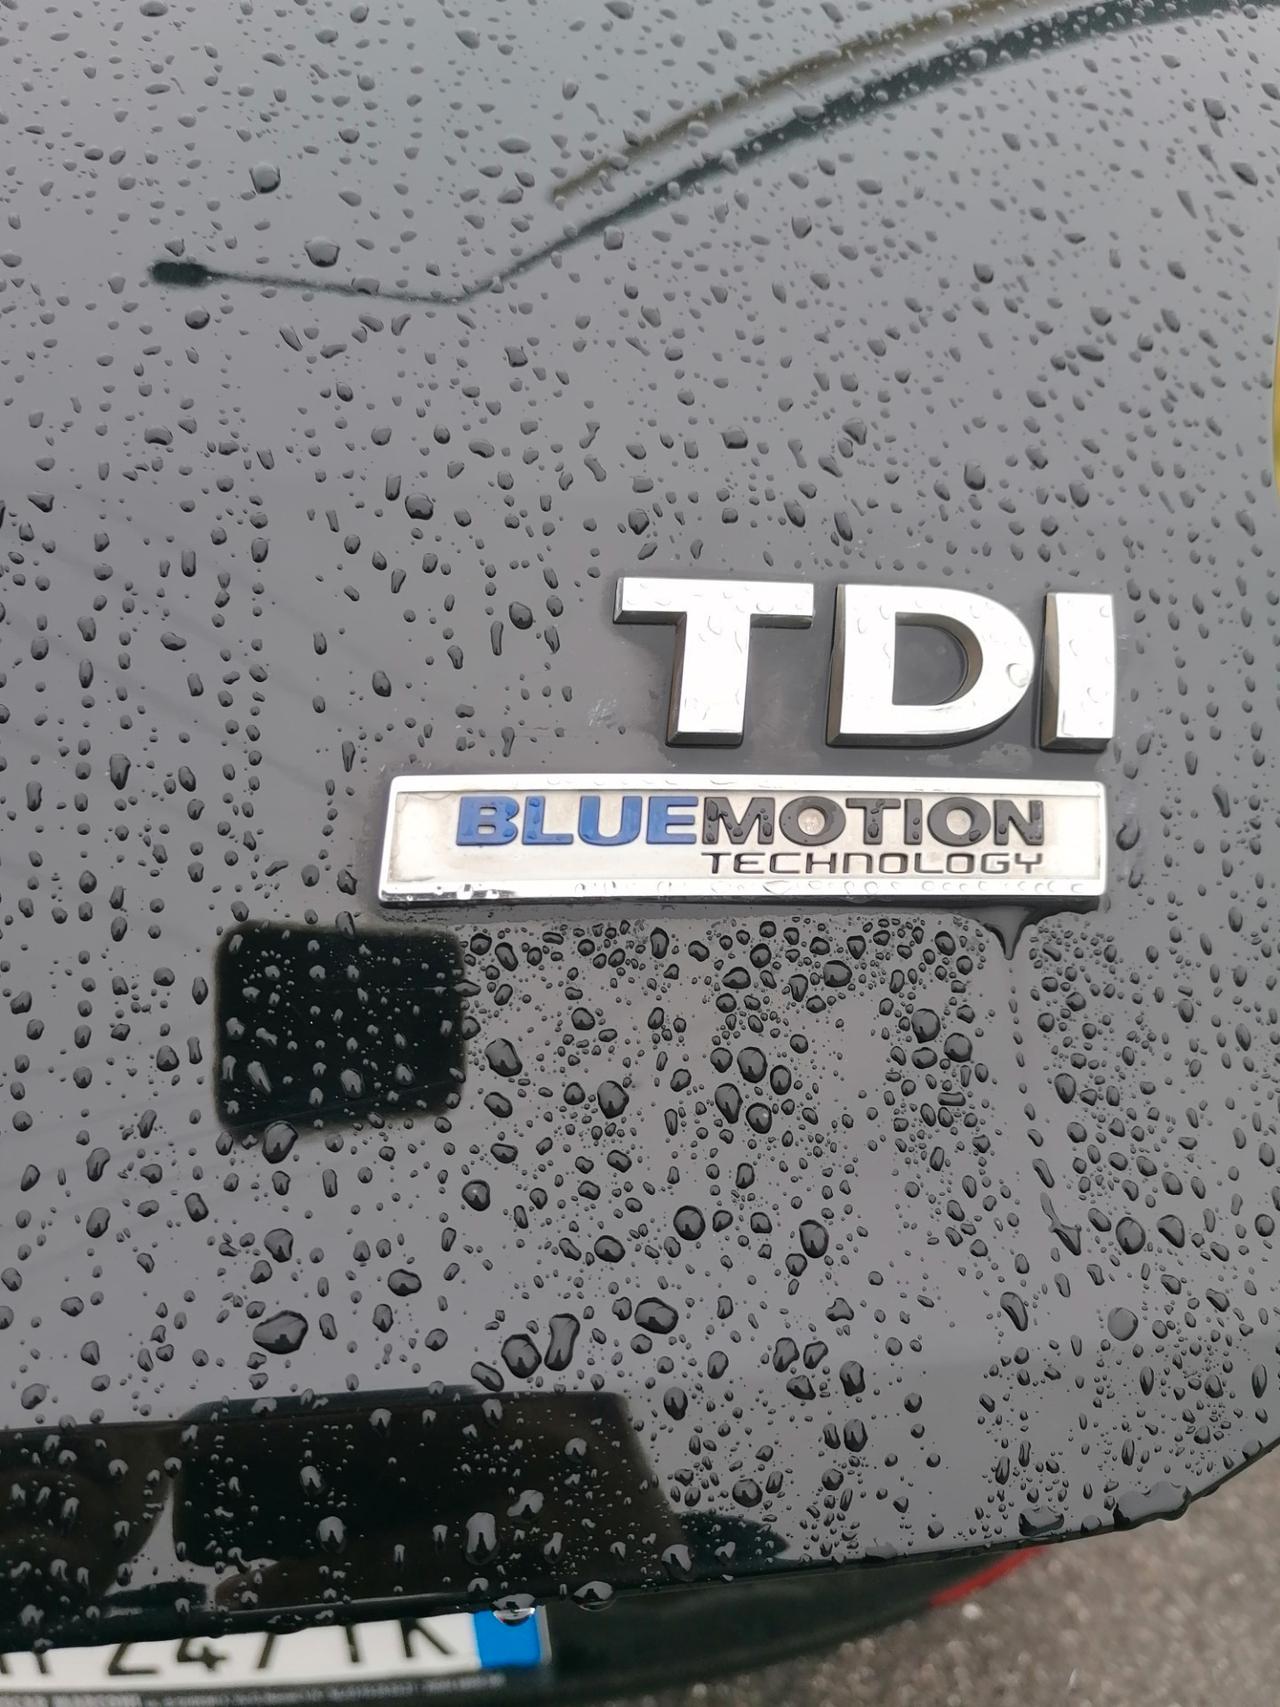 Volkswagen Polo 1.4 TDI 90 CV 5p. Comfortline BlueMotion Technology